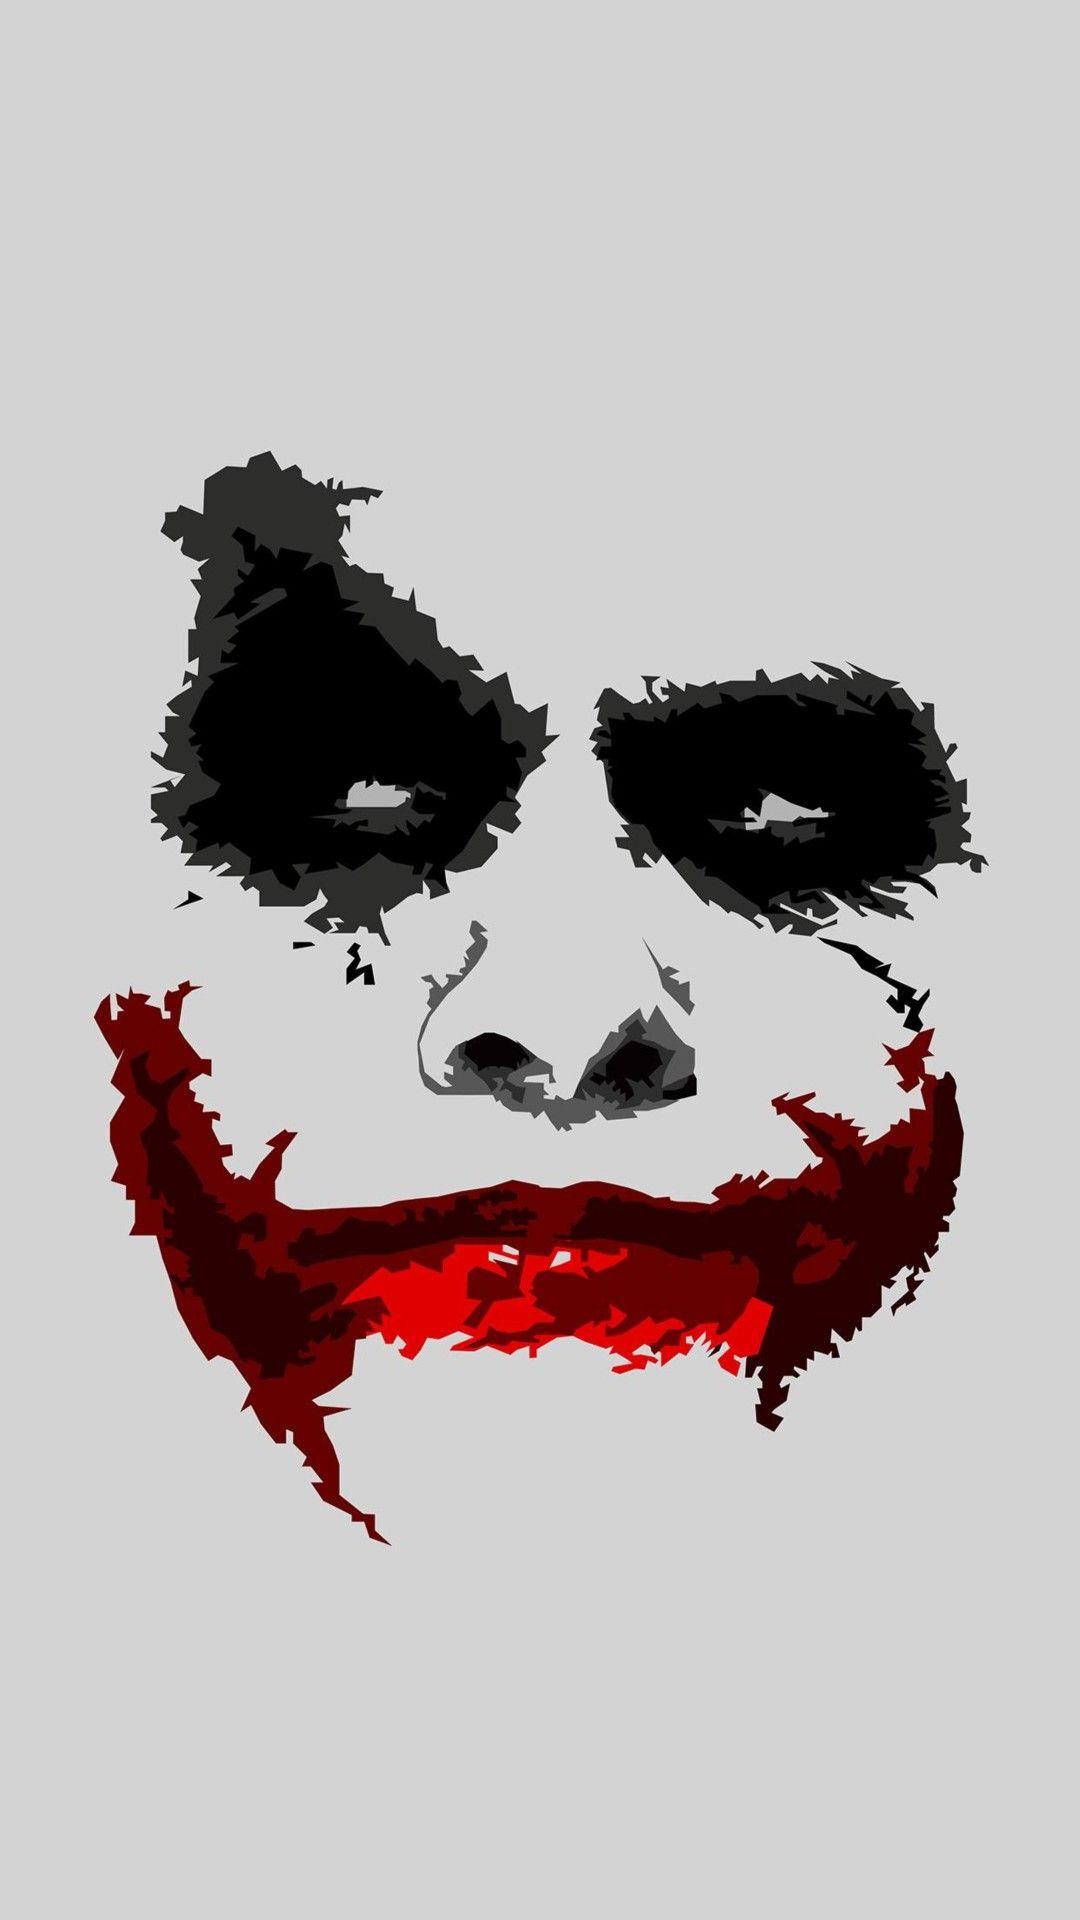 Joker Art. Joker iphone wallpaper, Joker artwork